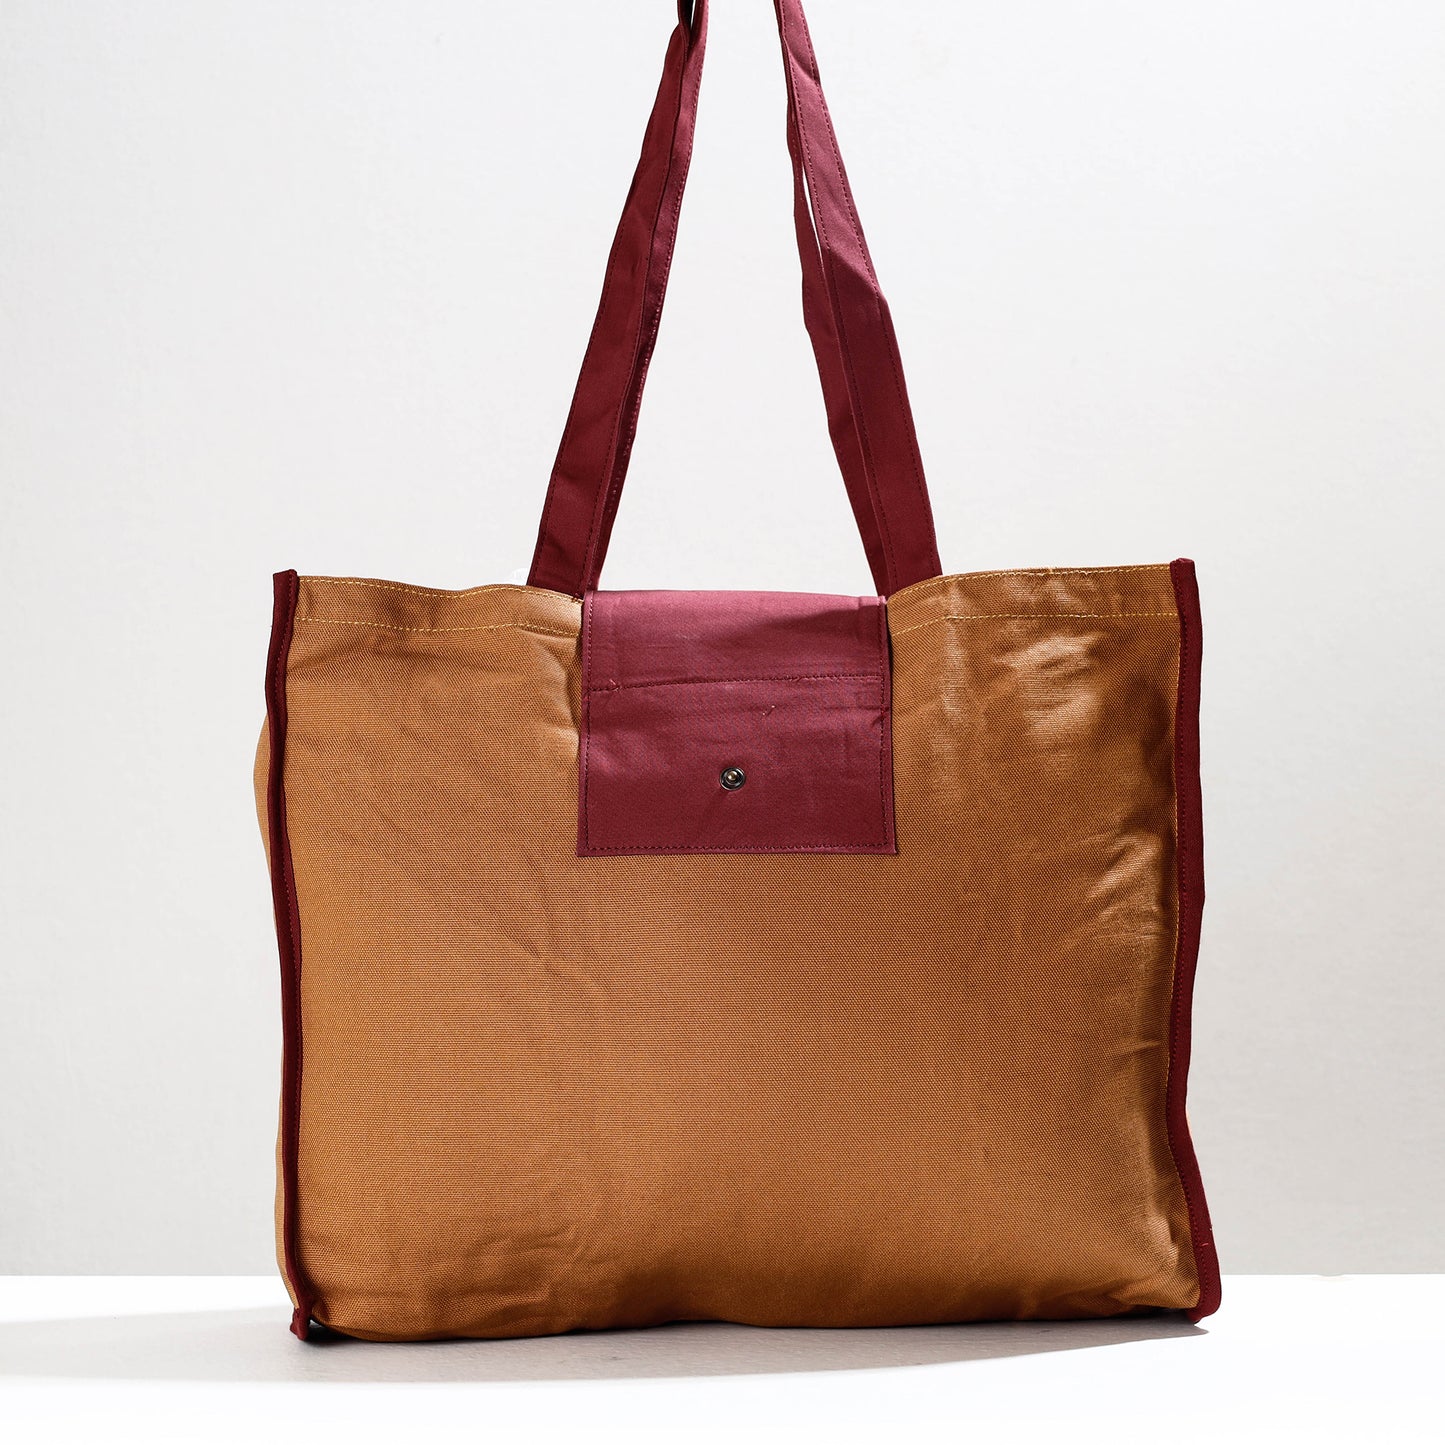 Brown - Handpainted Kalamkari Natural Dyed Cotton Shoulder Bag